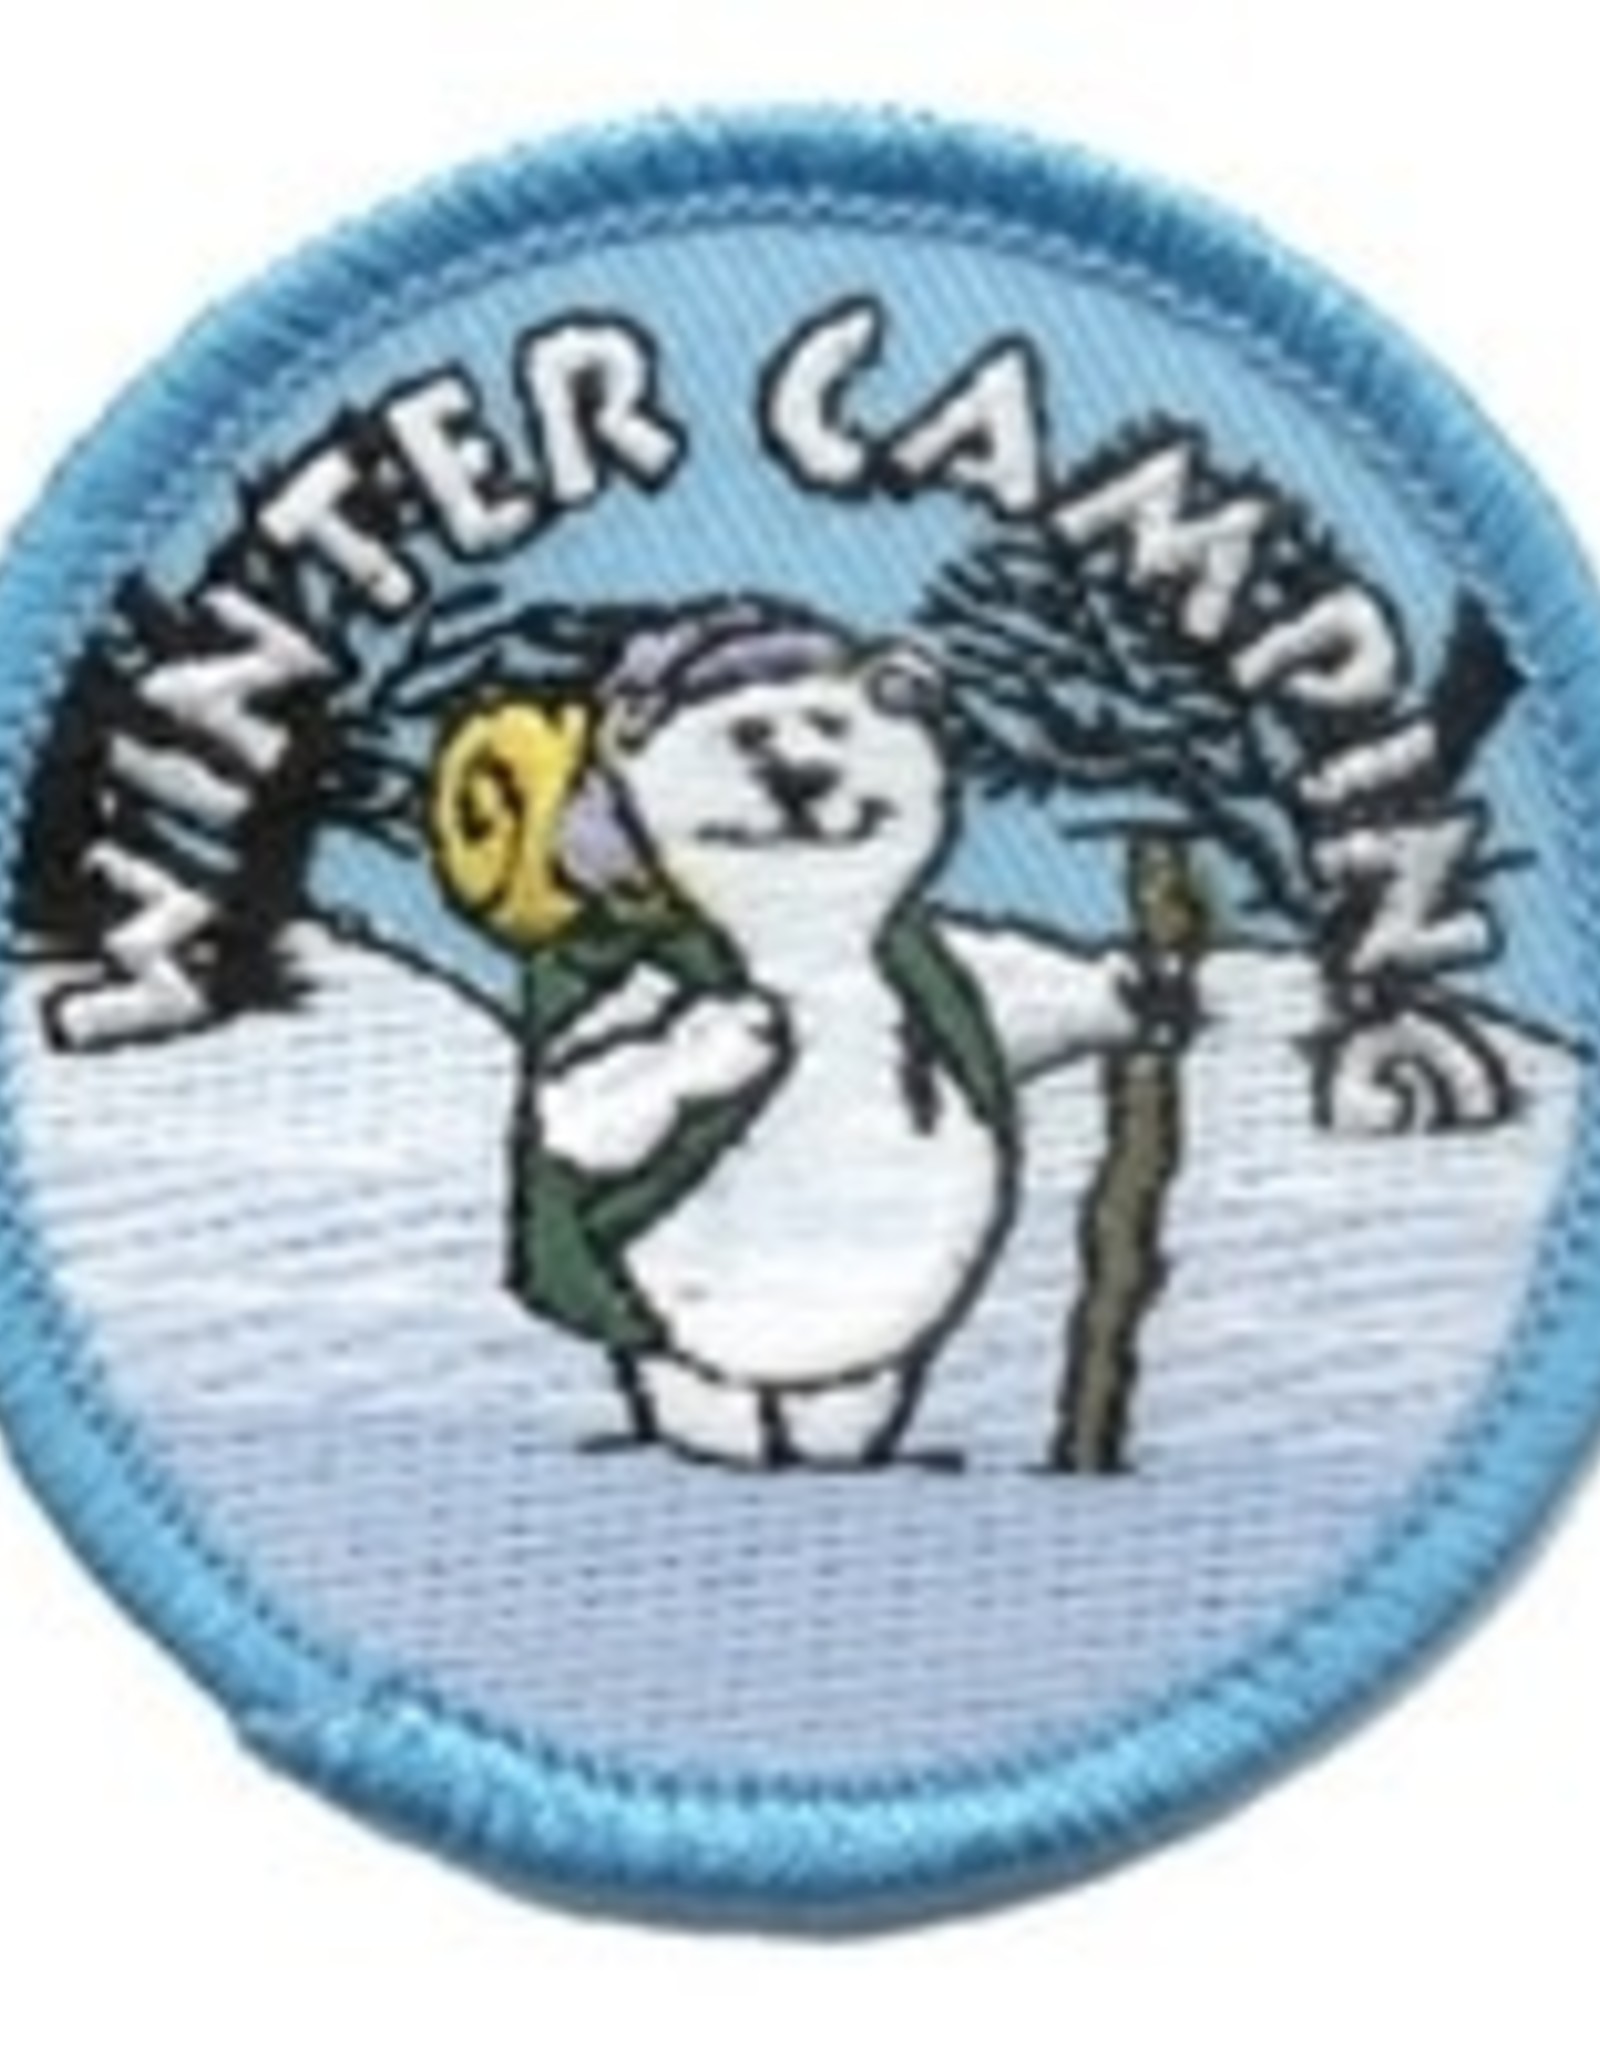 Advantage Emblem & Screen Prnt *Winter Camping w/ Polar Bear Fun Patch